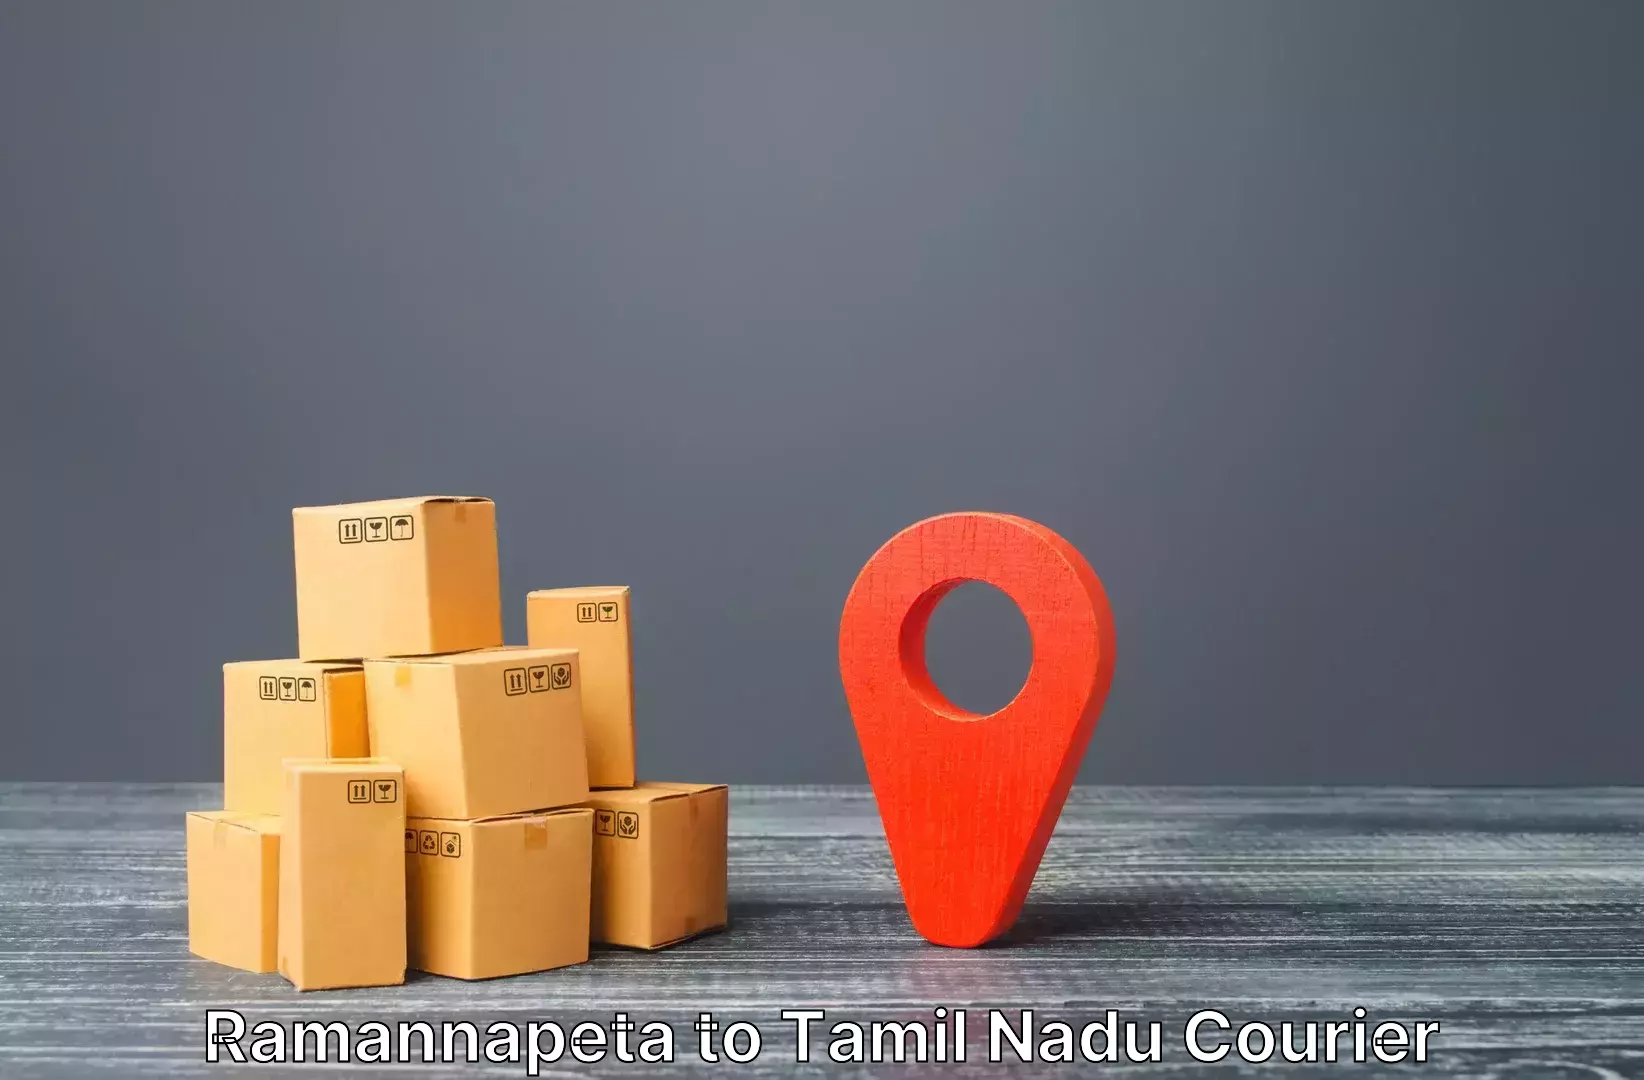 Urgent luggage shipment in Ramannapeta to Pushpavanam